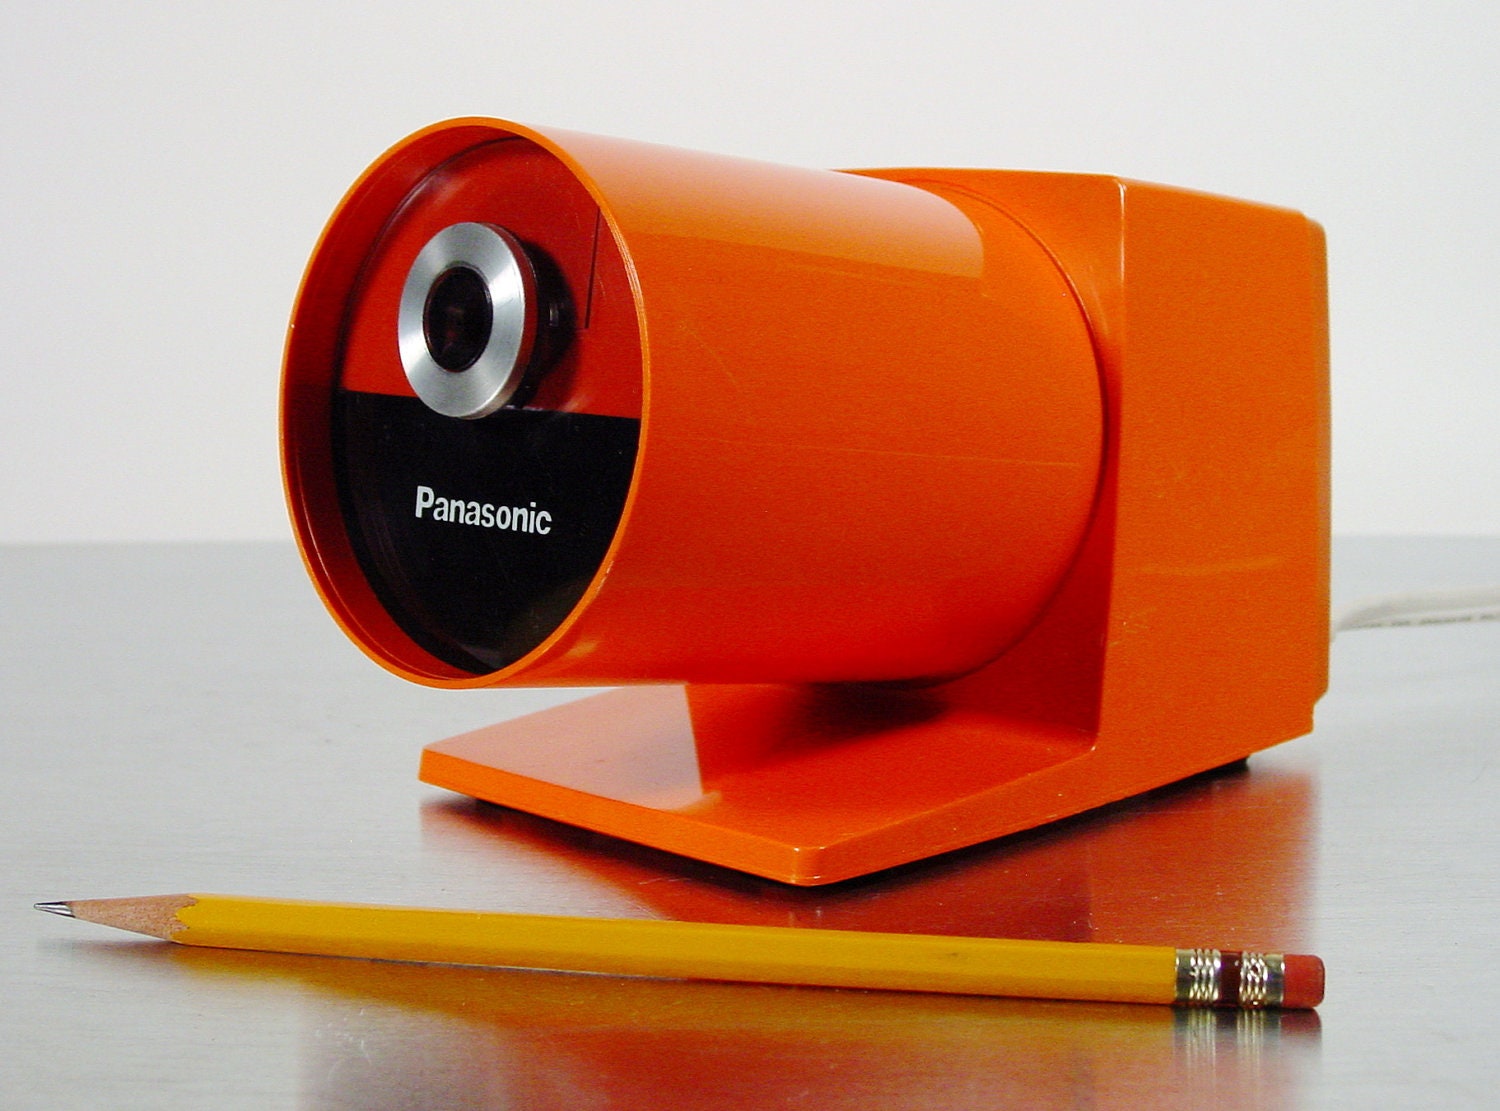 Midcentury Modern Orange Electric Pencil Sharpener by Panasonic, model KP-22A Pana-Point Mod Pop Art Pencil Sharpener, 1970s. - ClubModerne